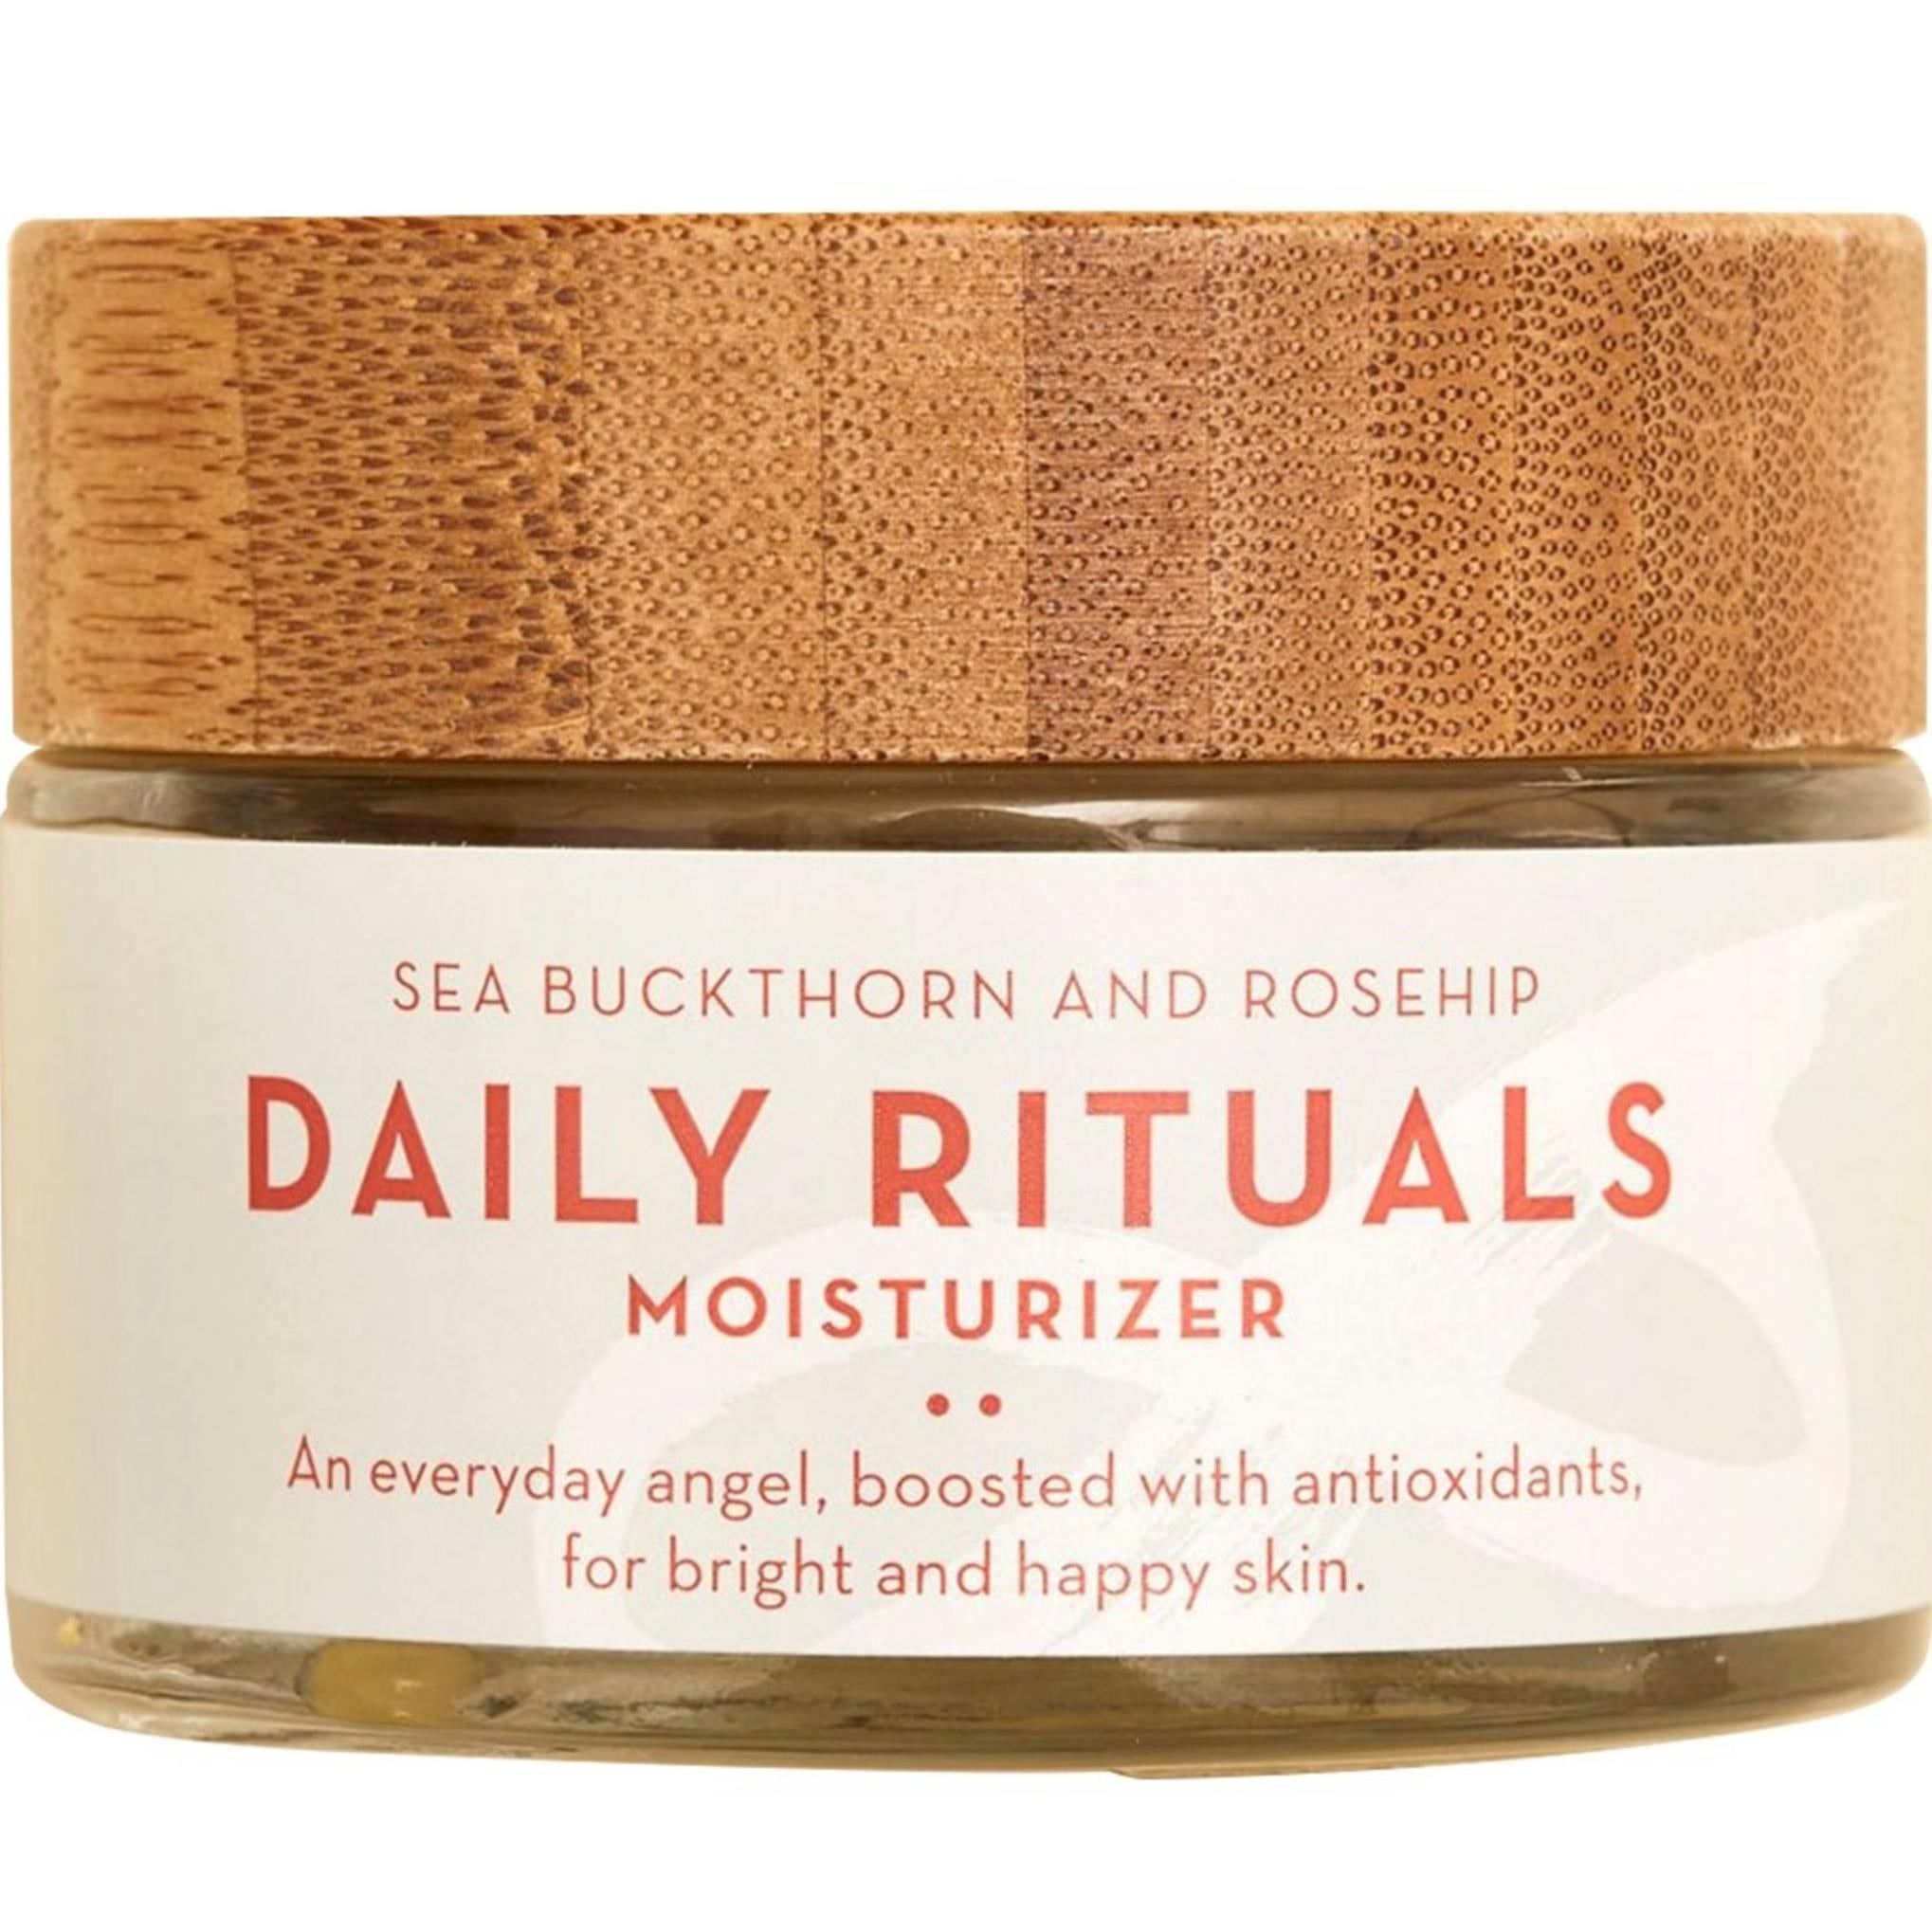 The Organic Skin Daily Ritoals C. Buckthorn & Rosehip Moisturizer